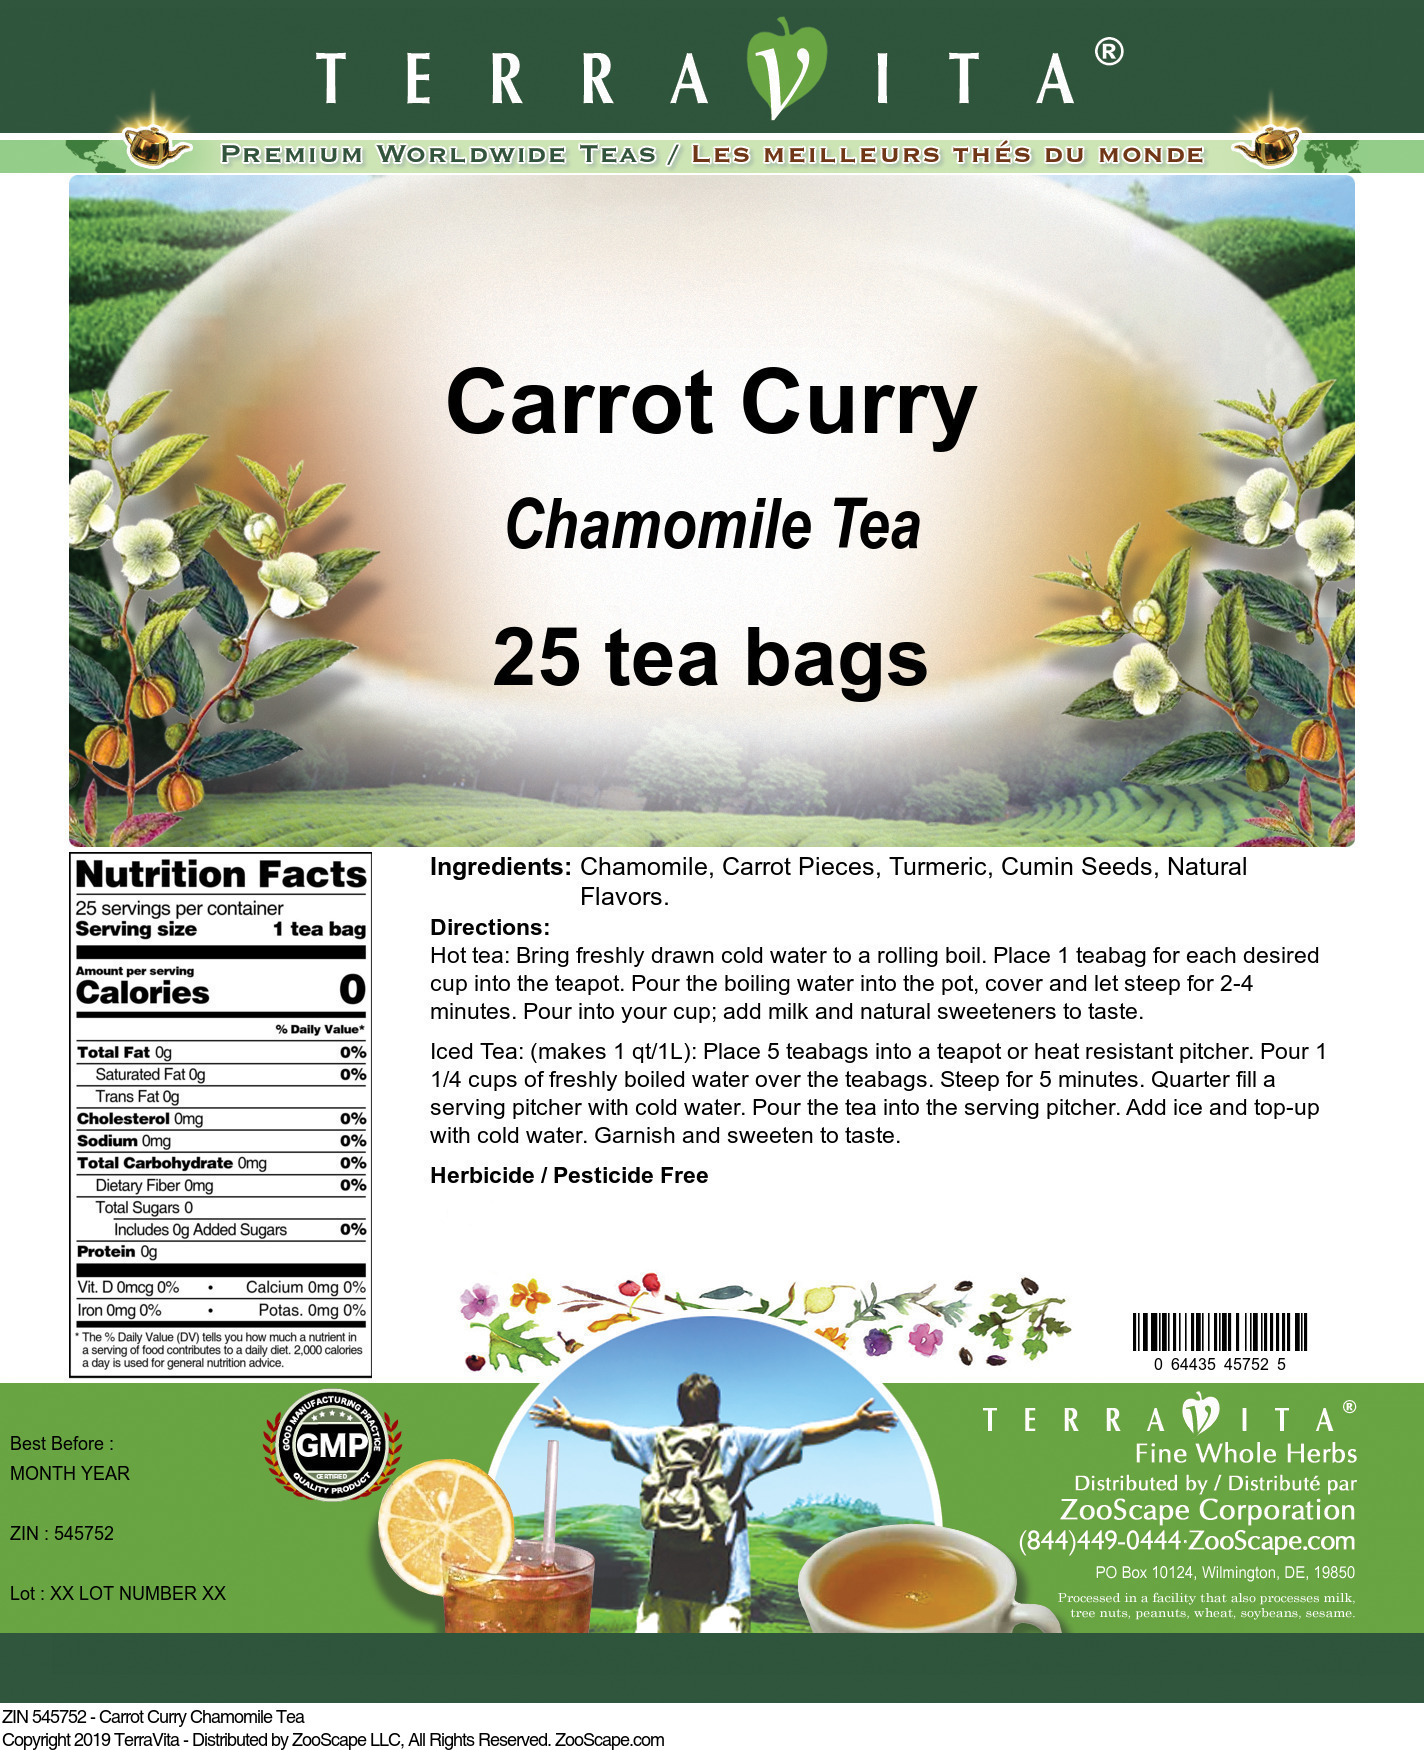 Carrot Curry Chamomile Tea - Label